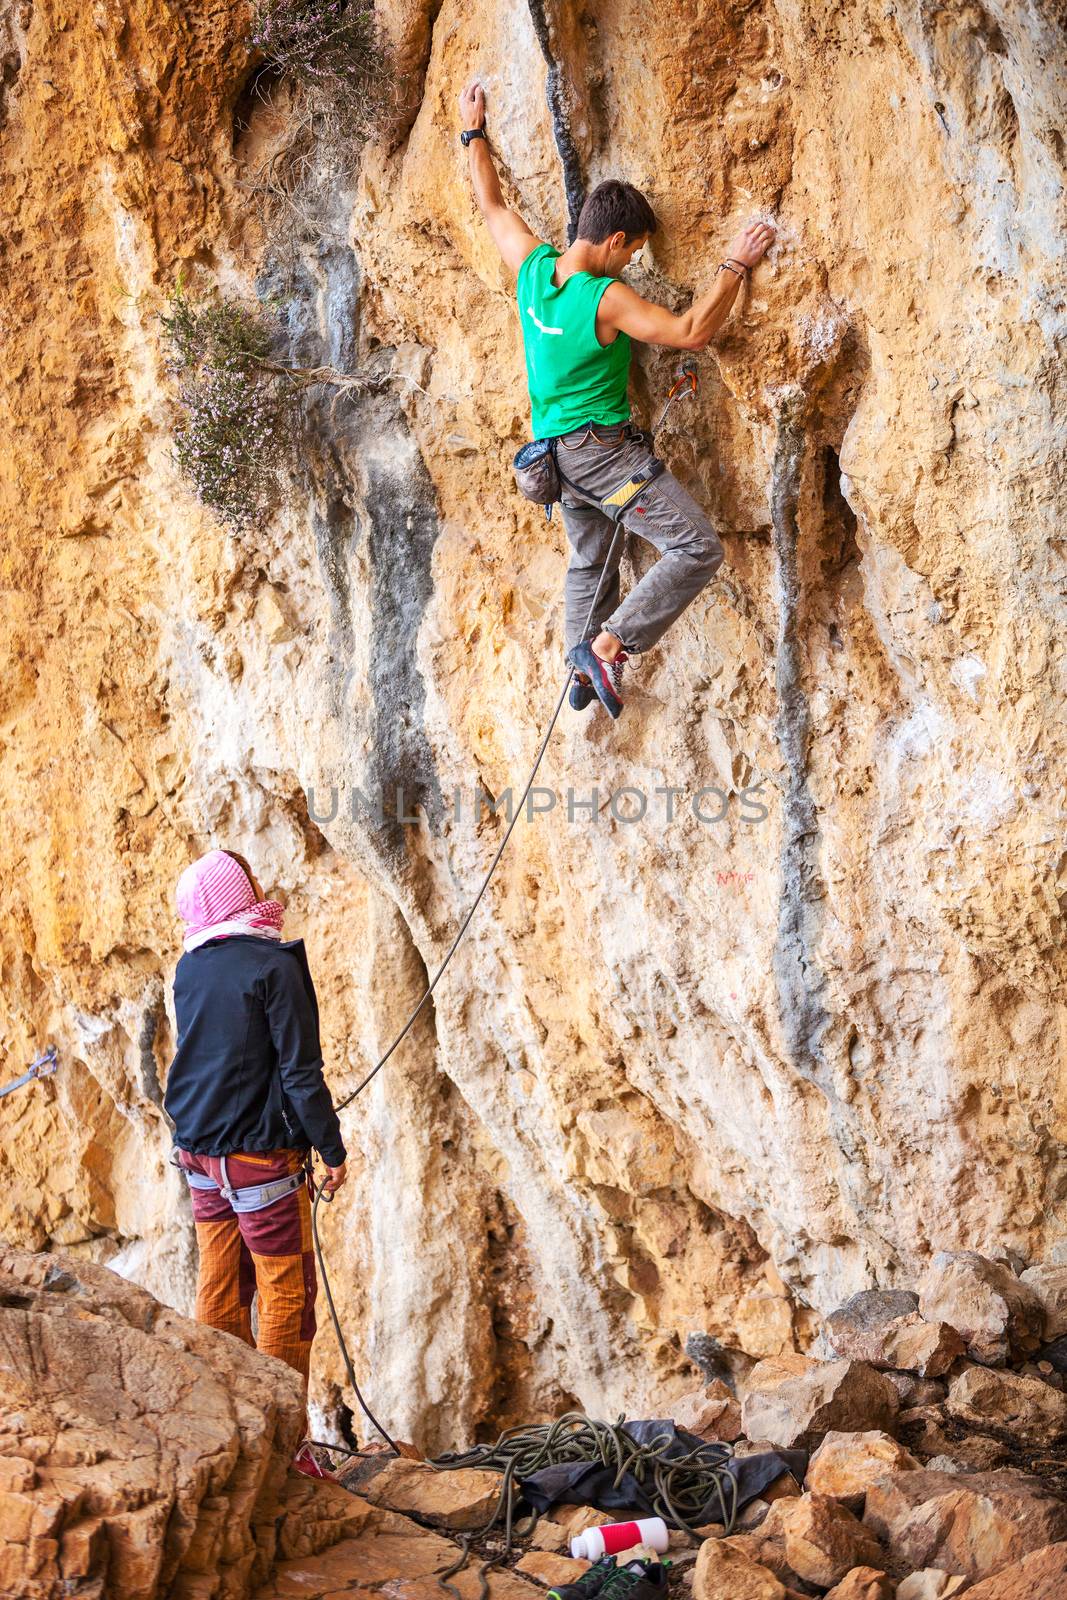 Man lead climbing on cliff, belayer watching hi by photobac